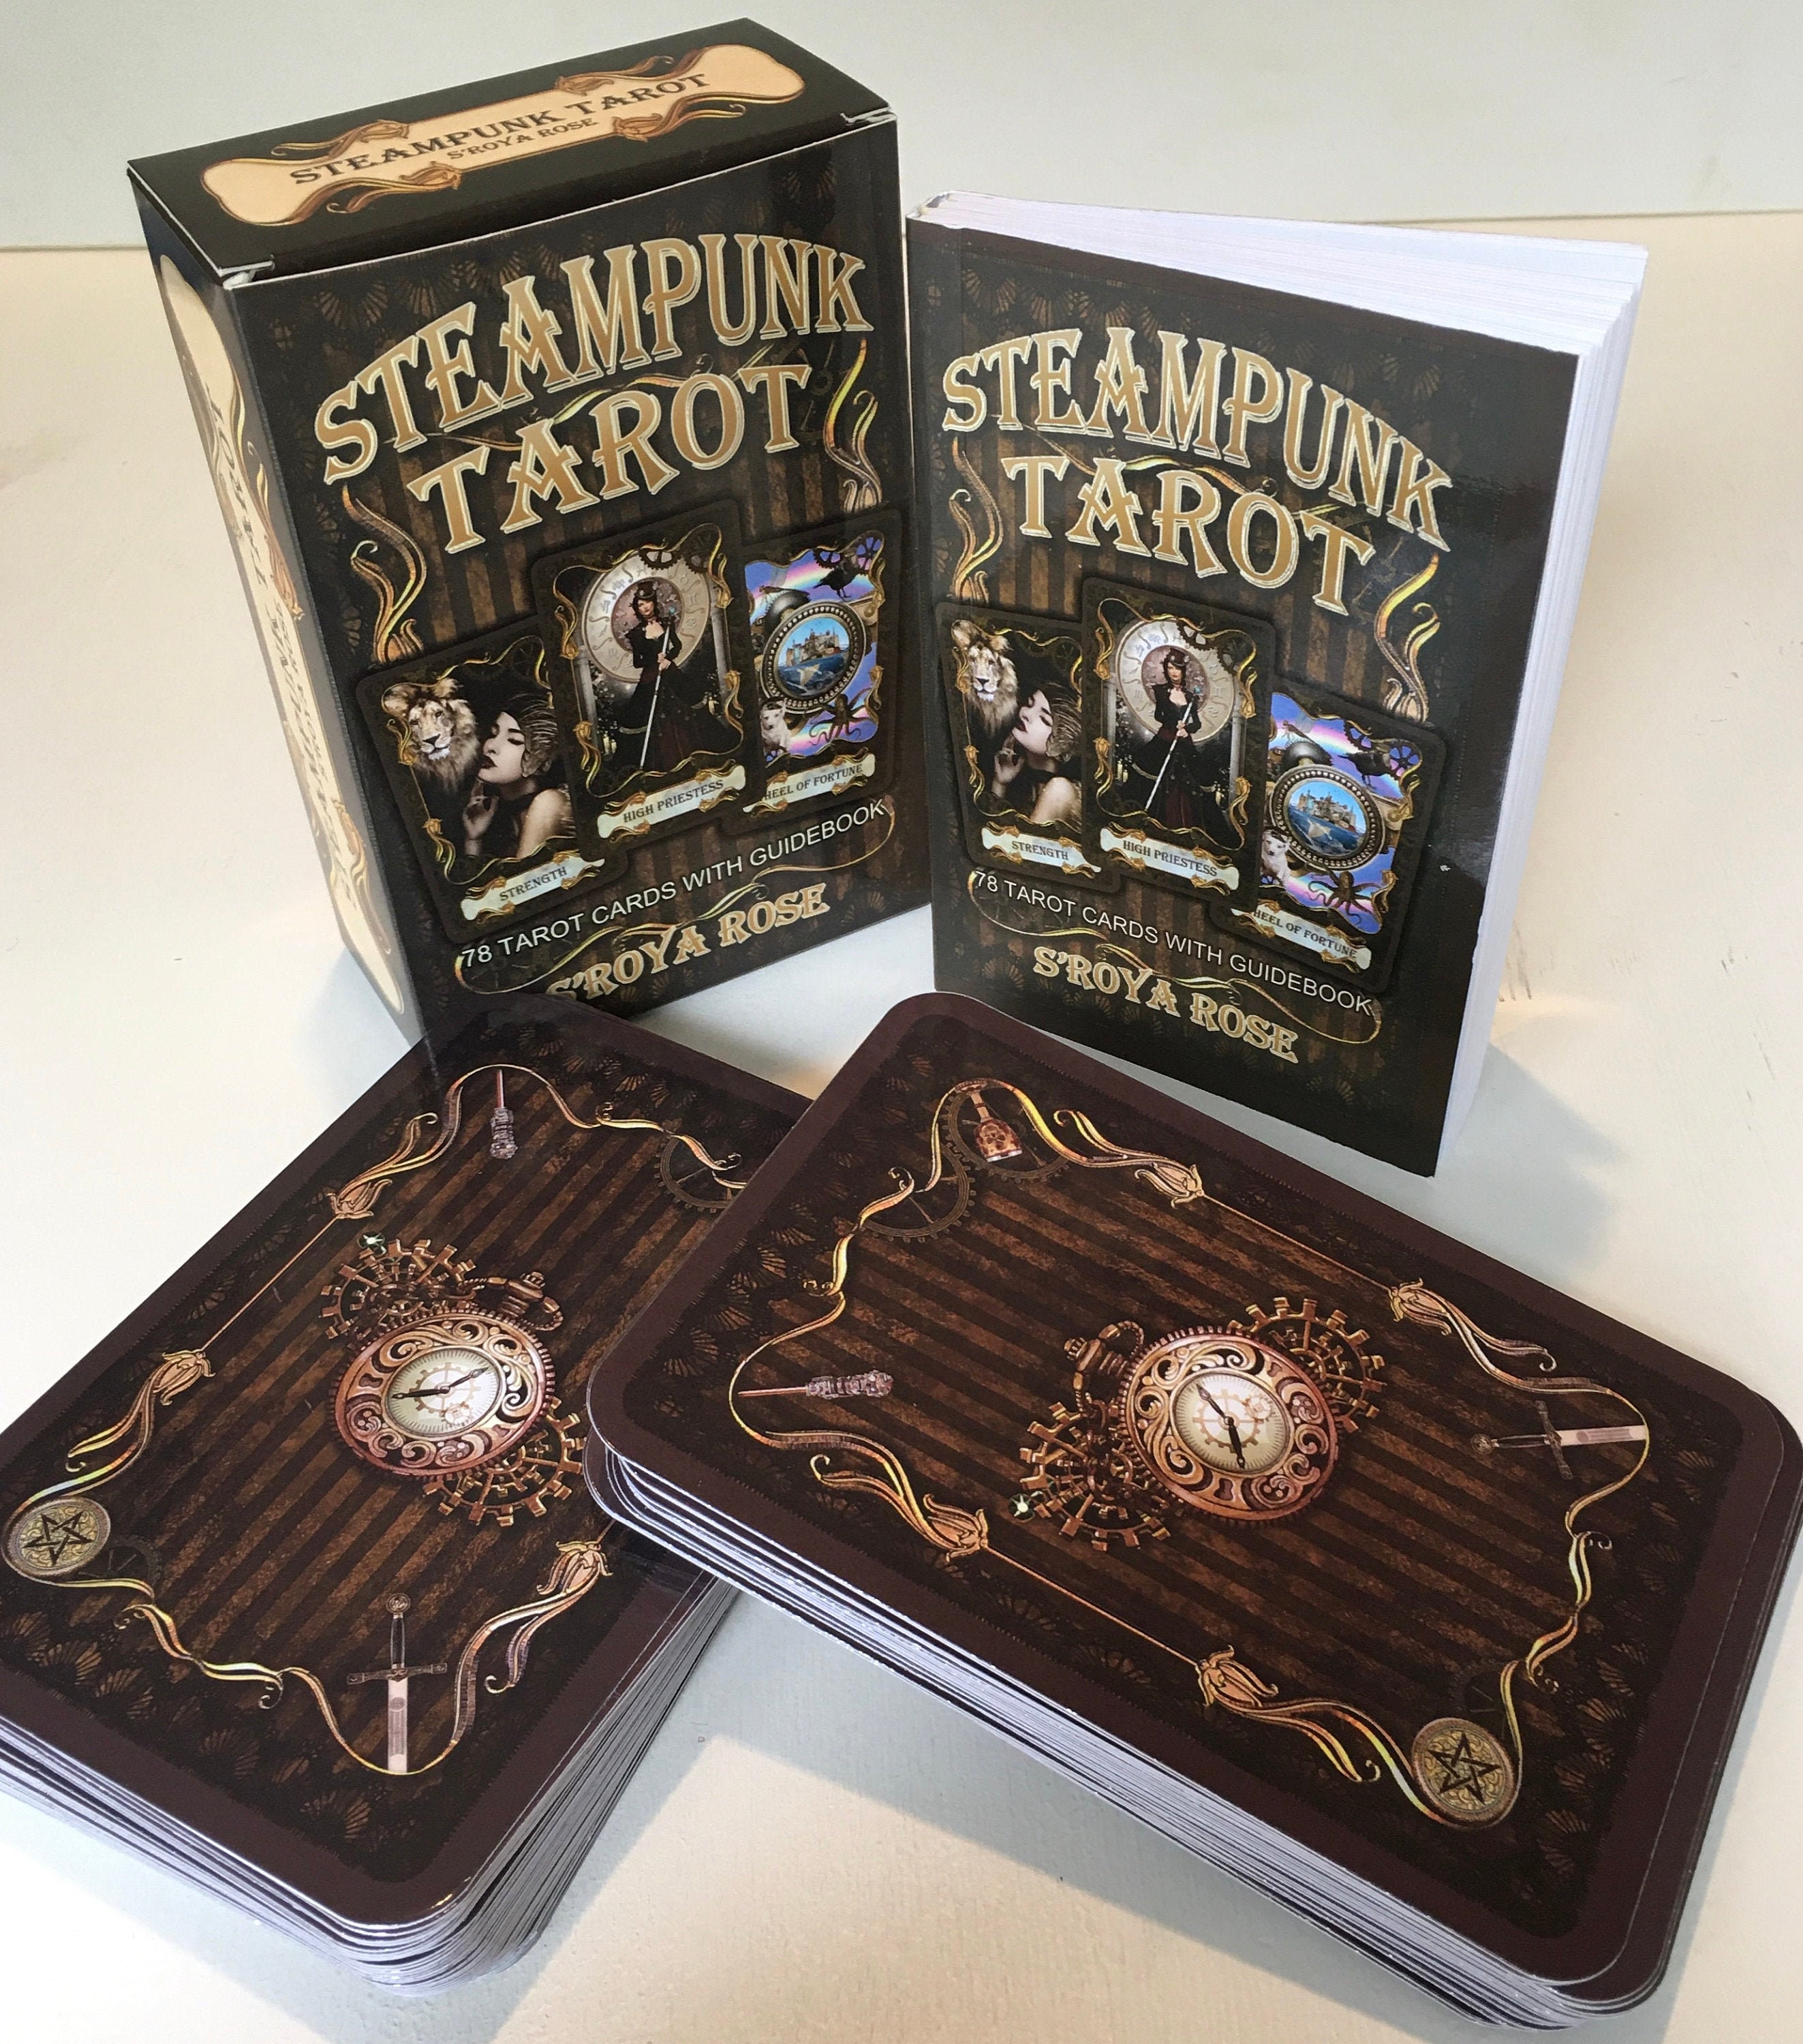 The Steampunk Tarot